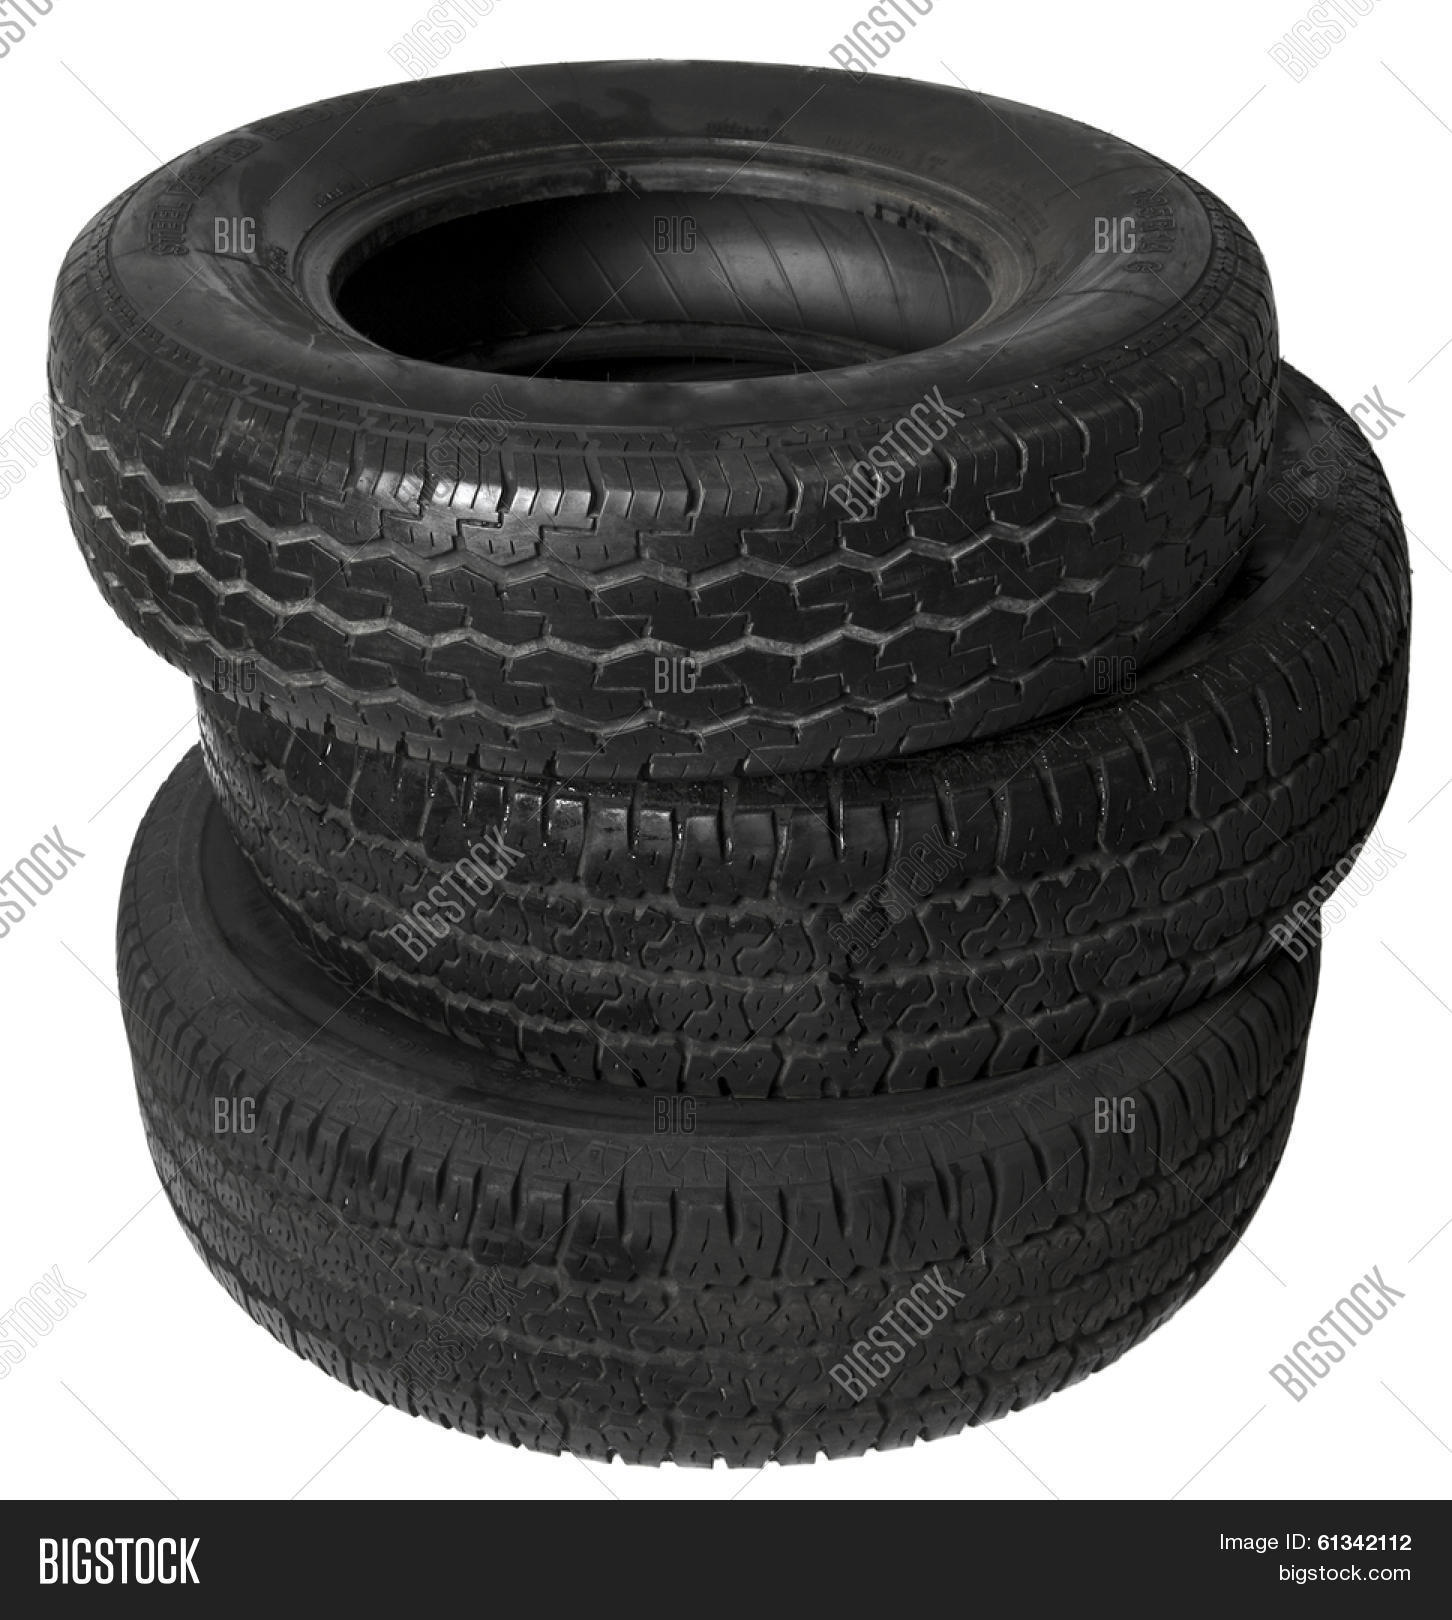 Stack Tires On White Image & Photo | Bigstock